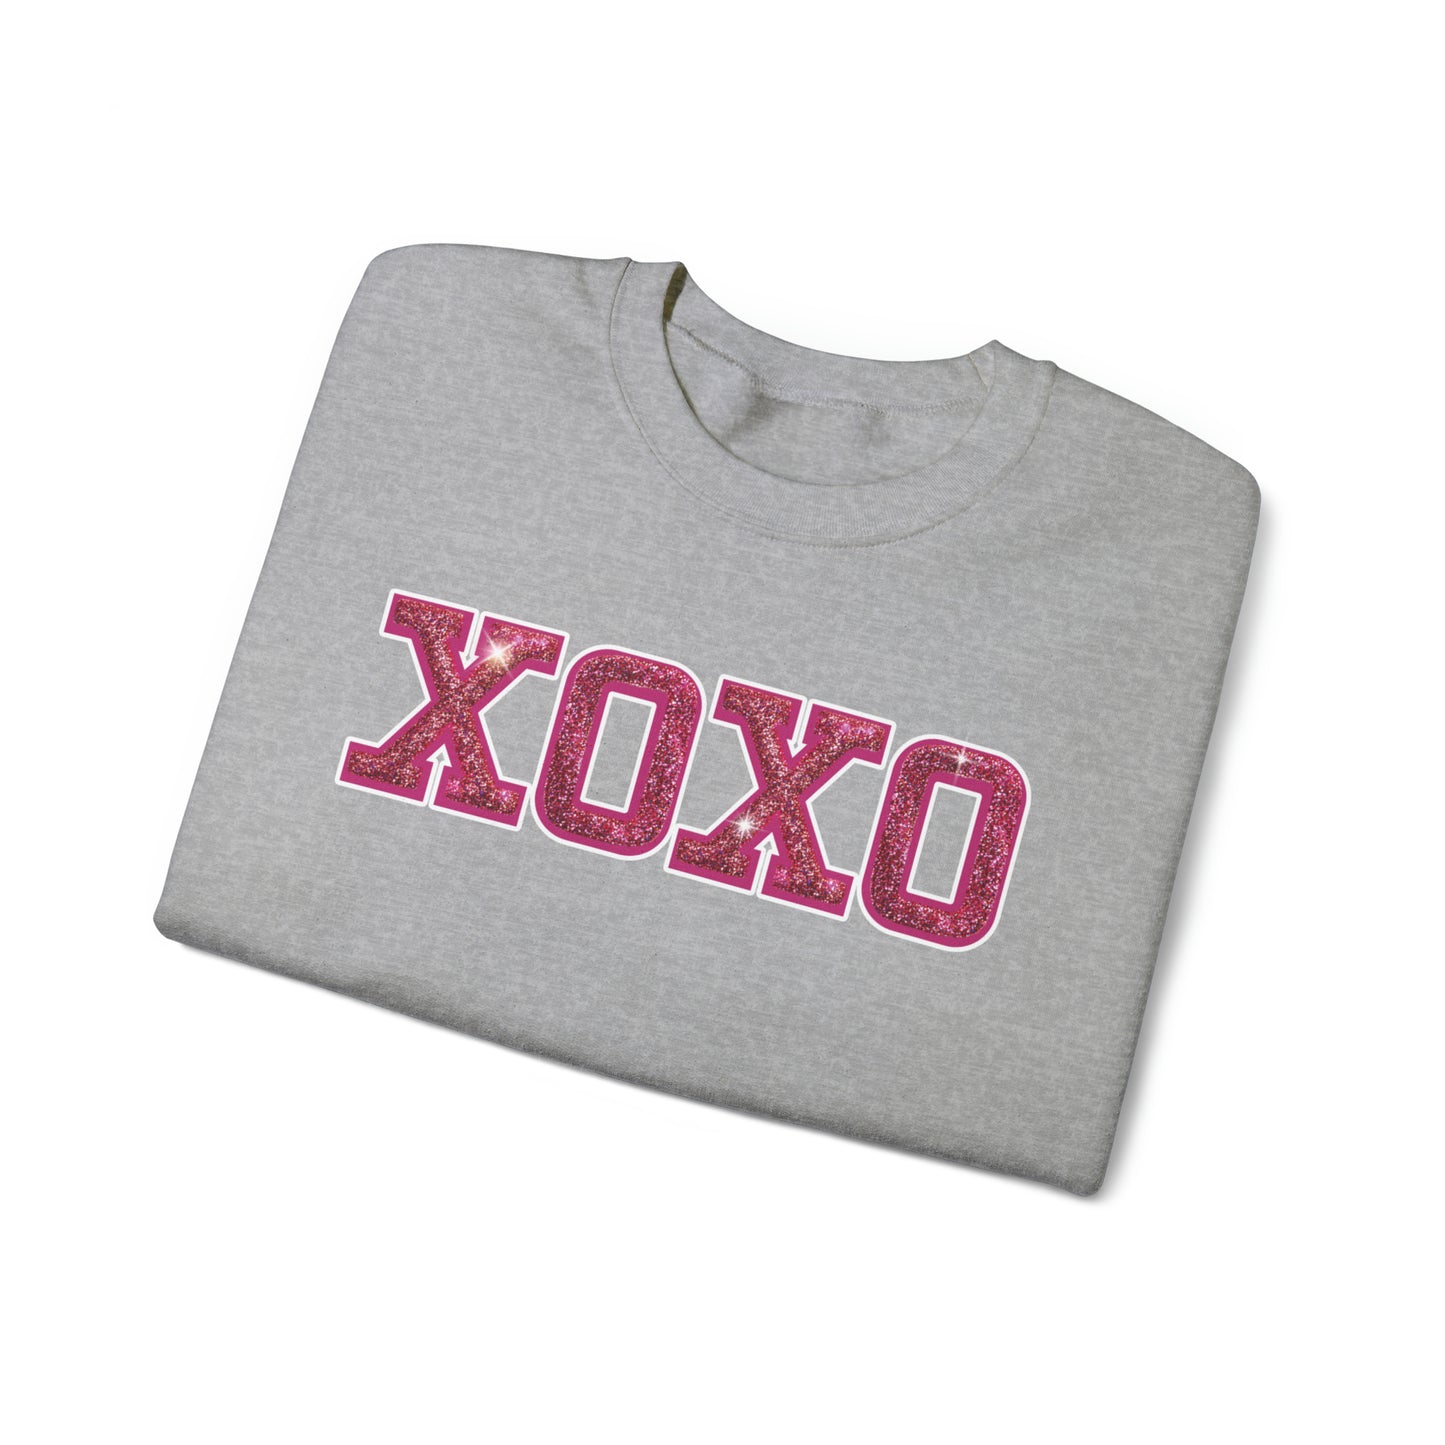 Adult "XOXO" | Valentine's Day | Unisex Sweatshirt